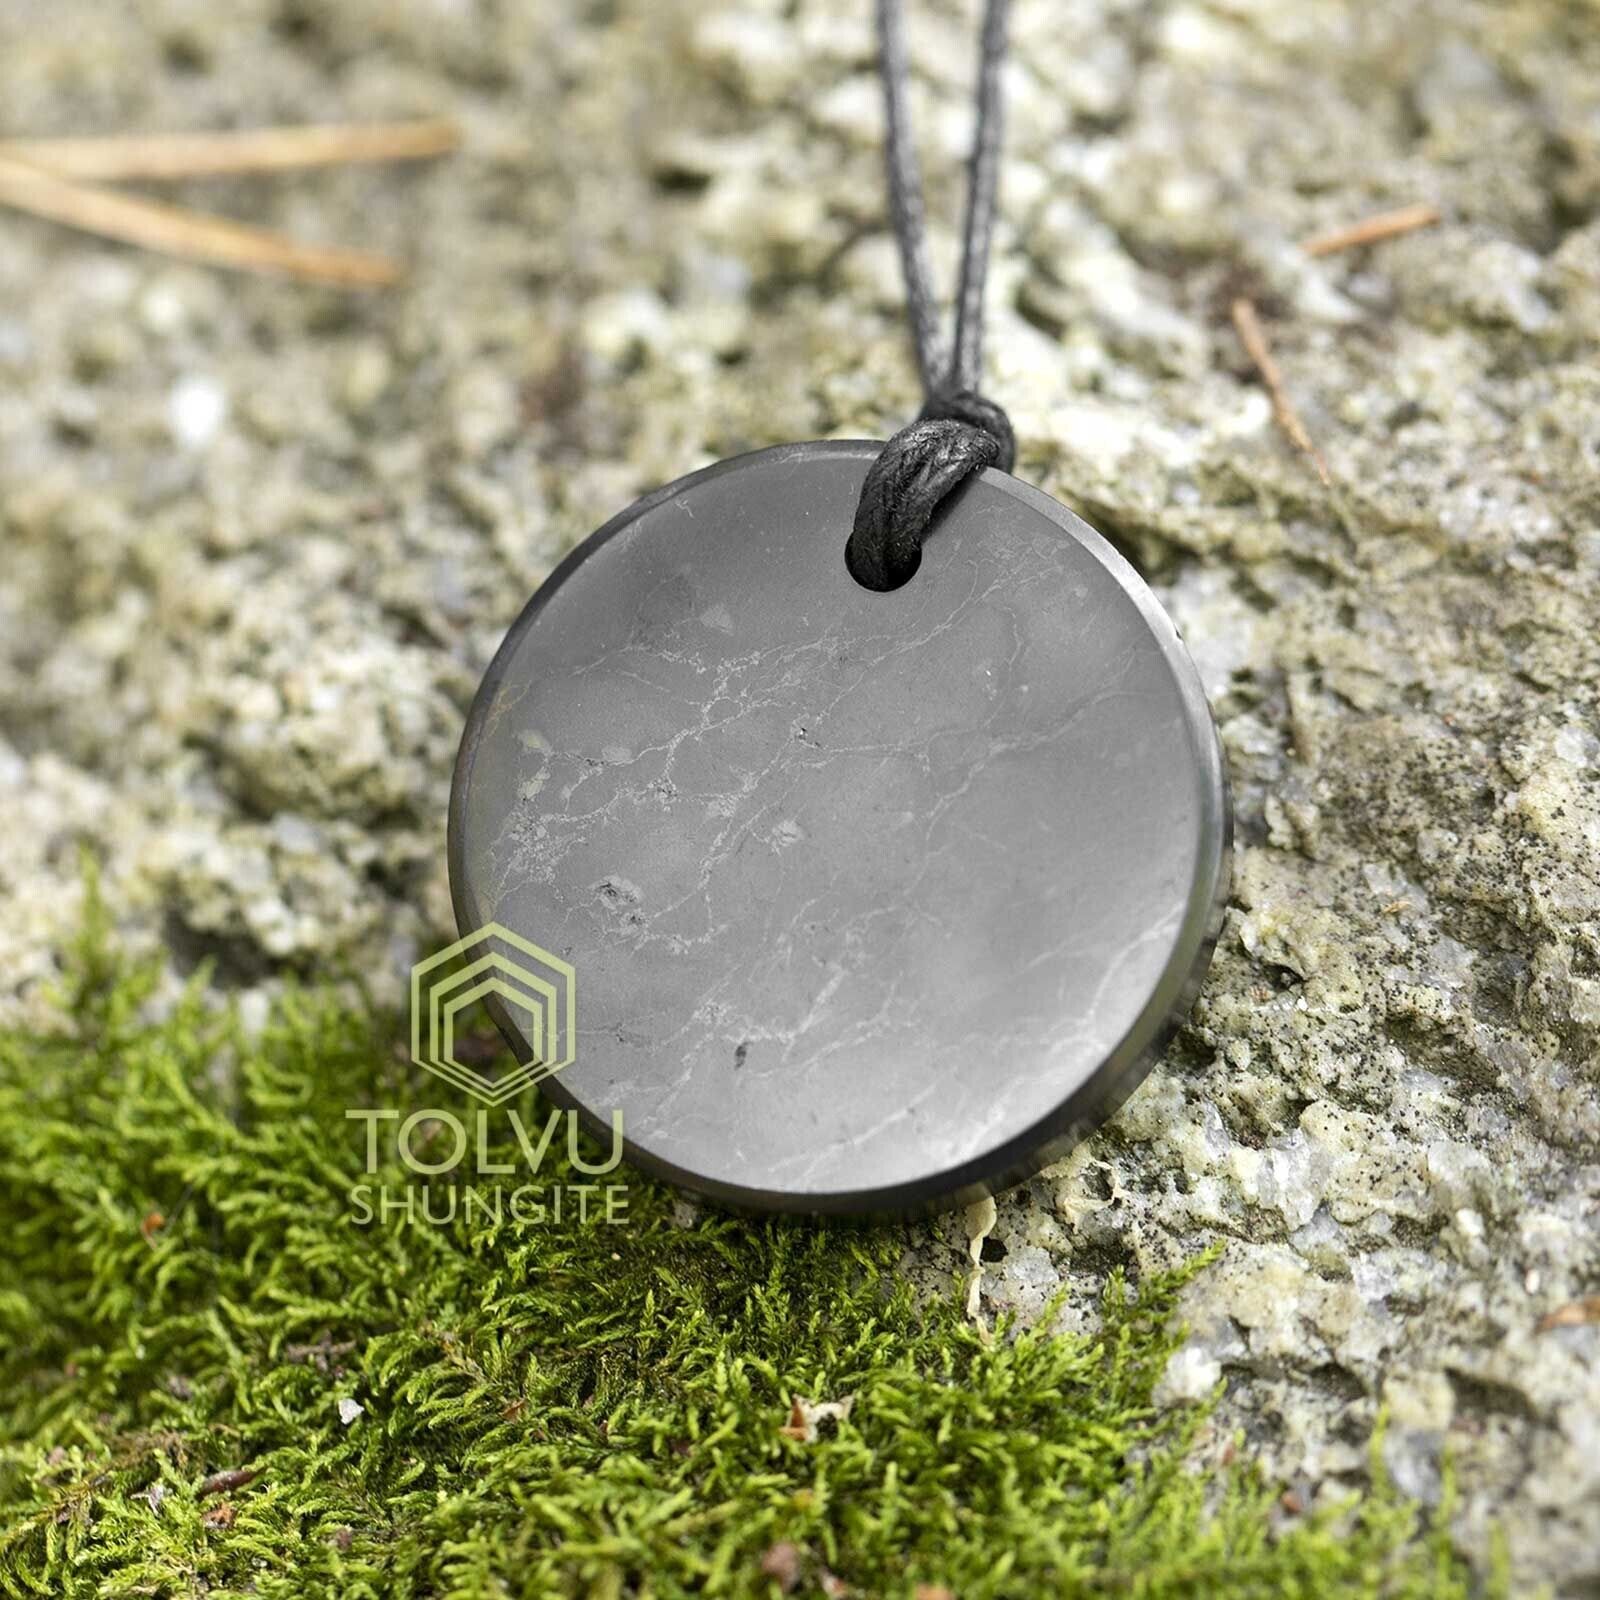 Shungite pendant small size, genuine shungite stone form Karelia, Tolvu